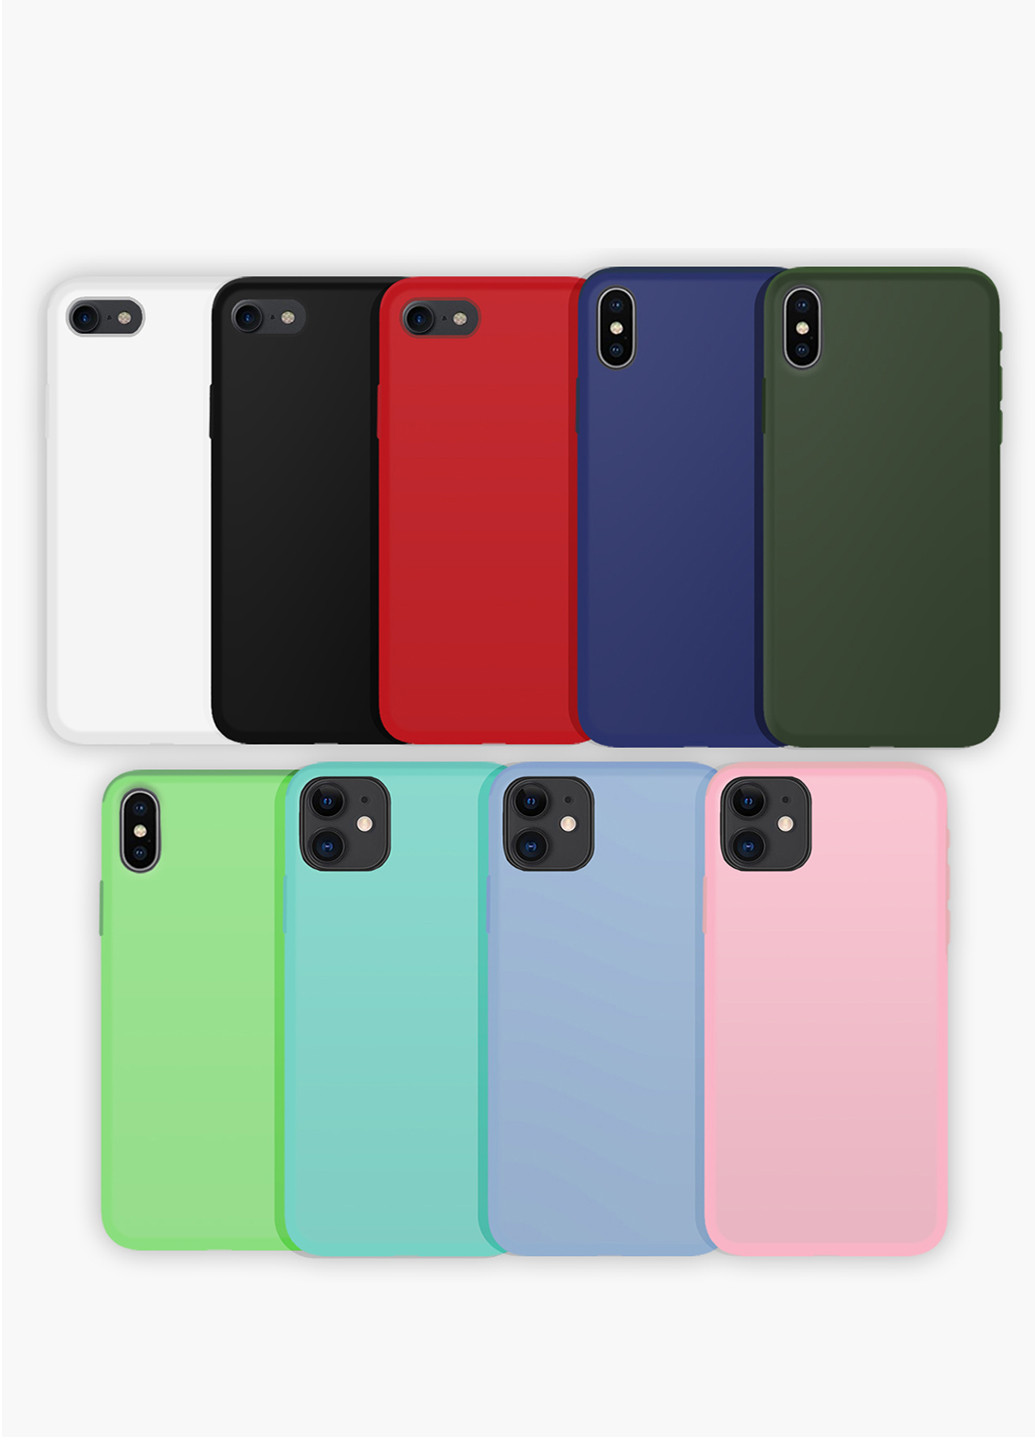 Чохол силіконовий Apple Iphone 6 Плейлист Обстановка по кайфу Олег Кензов (6937-1628) MobiPrint (219778021)